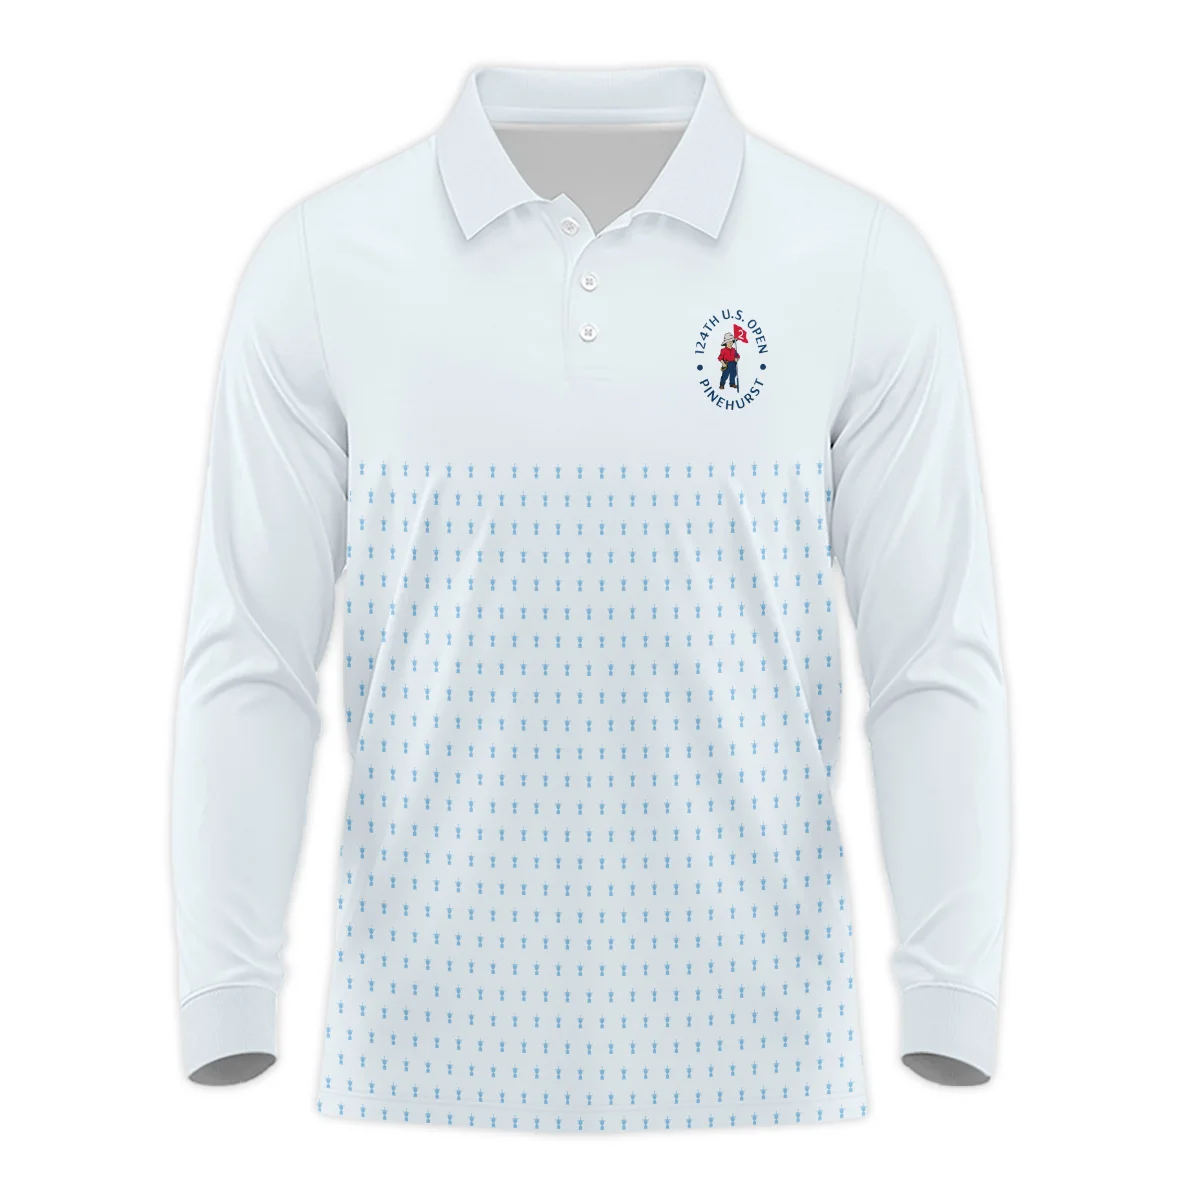 U.S Open Trophy Pattern Light Blue 124th U.S. Open Pinehurst Titleist Vneck Polo Shirt Style Classic Polo Shirt For Men